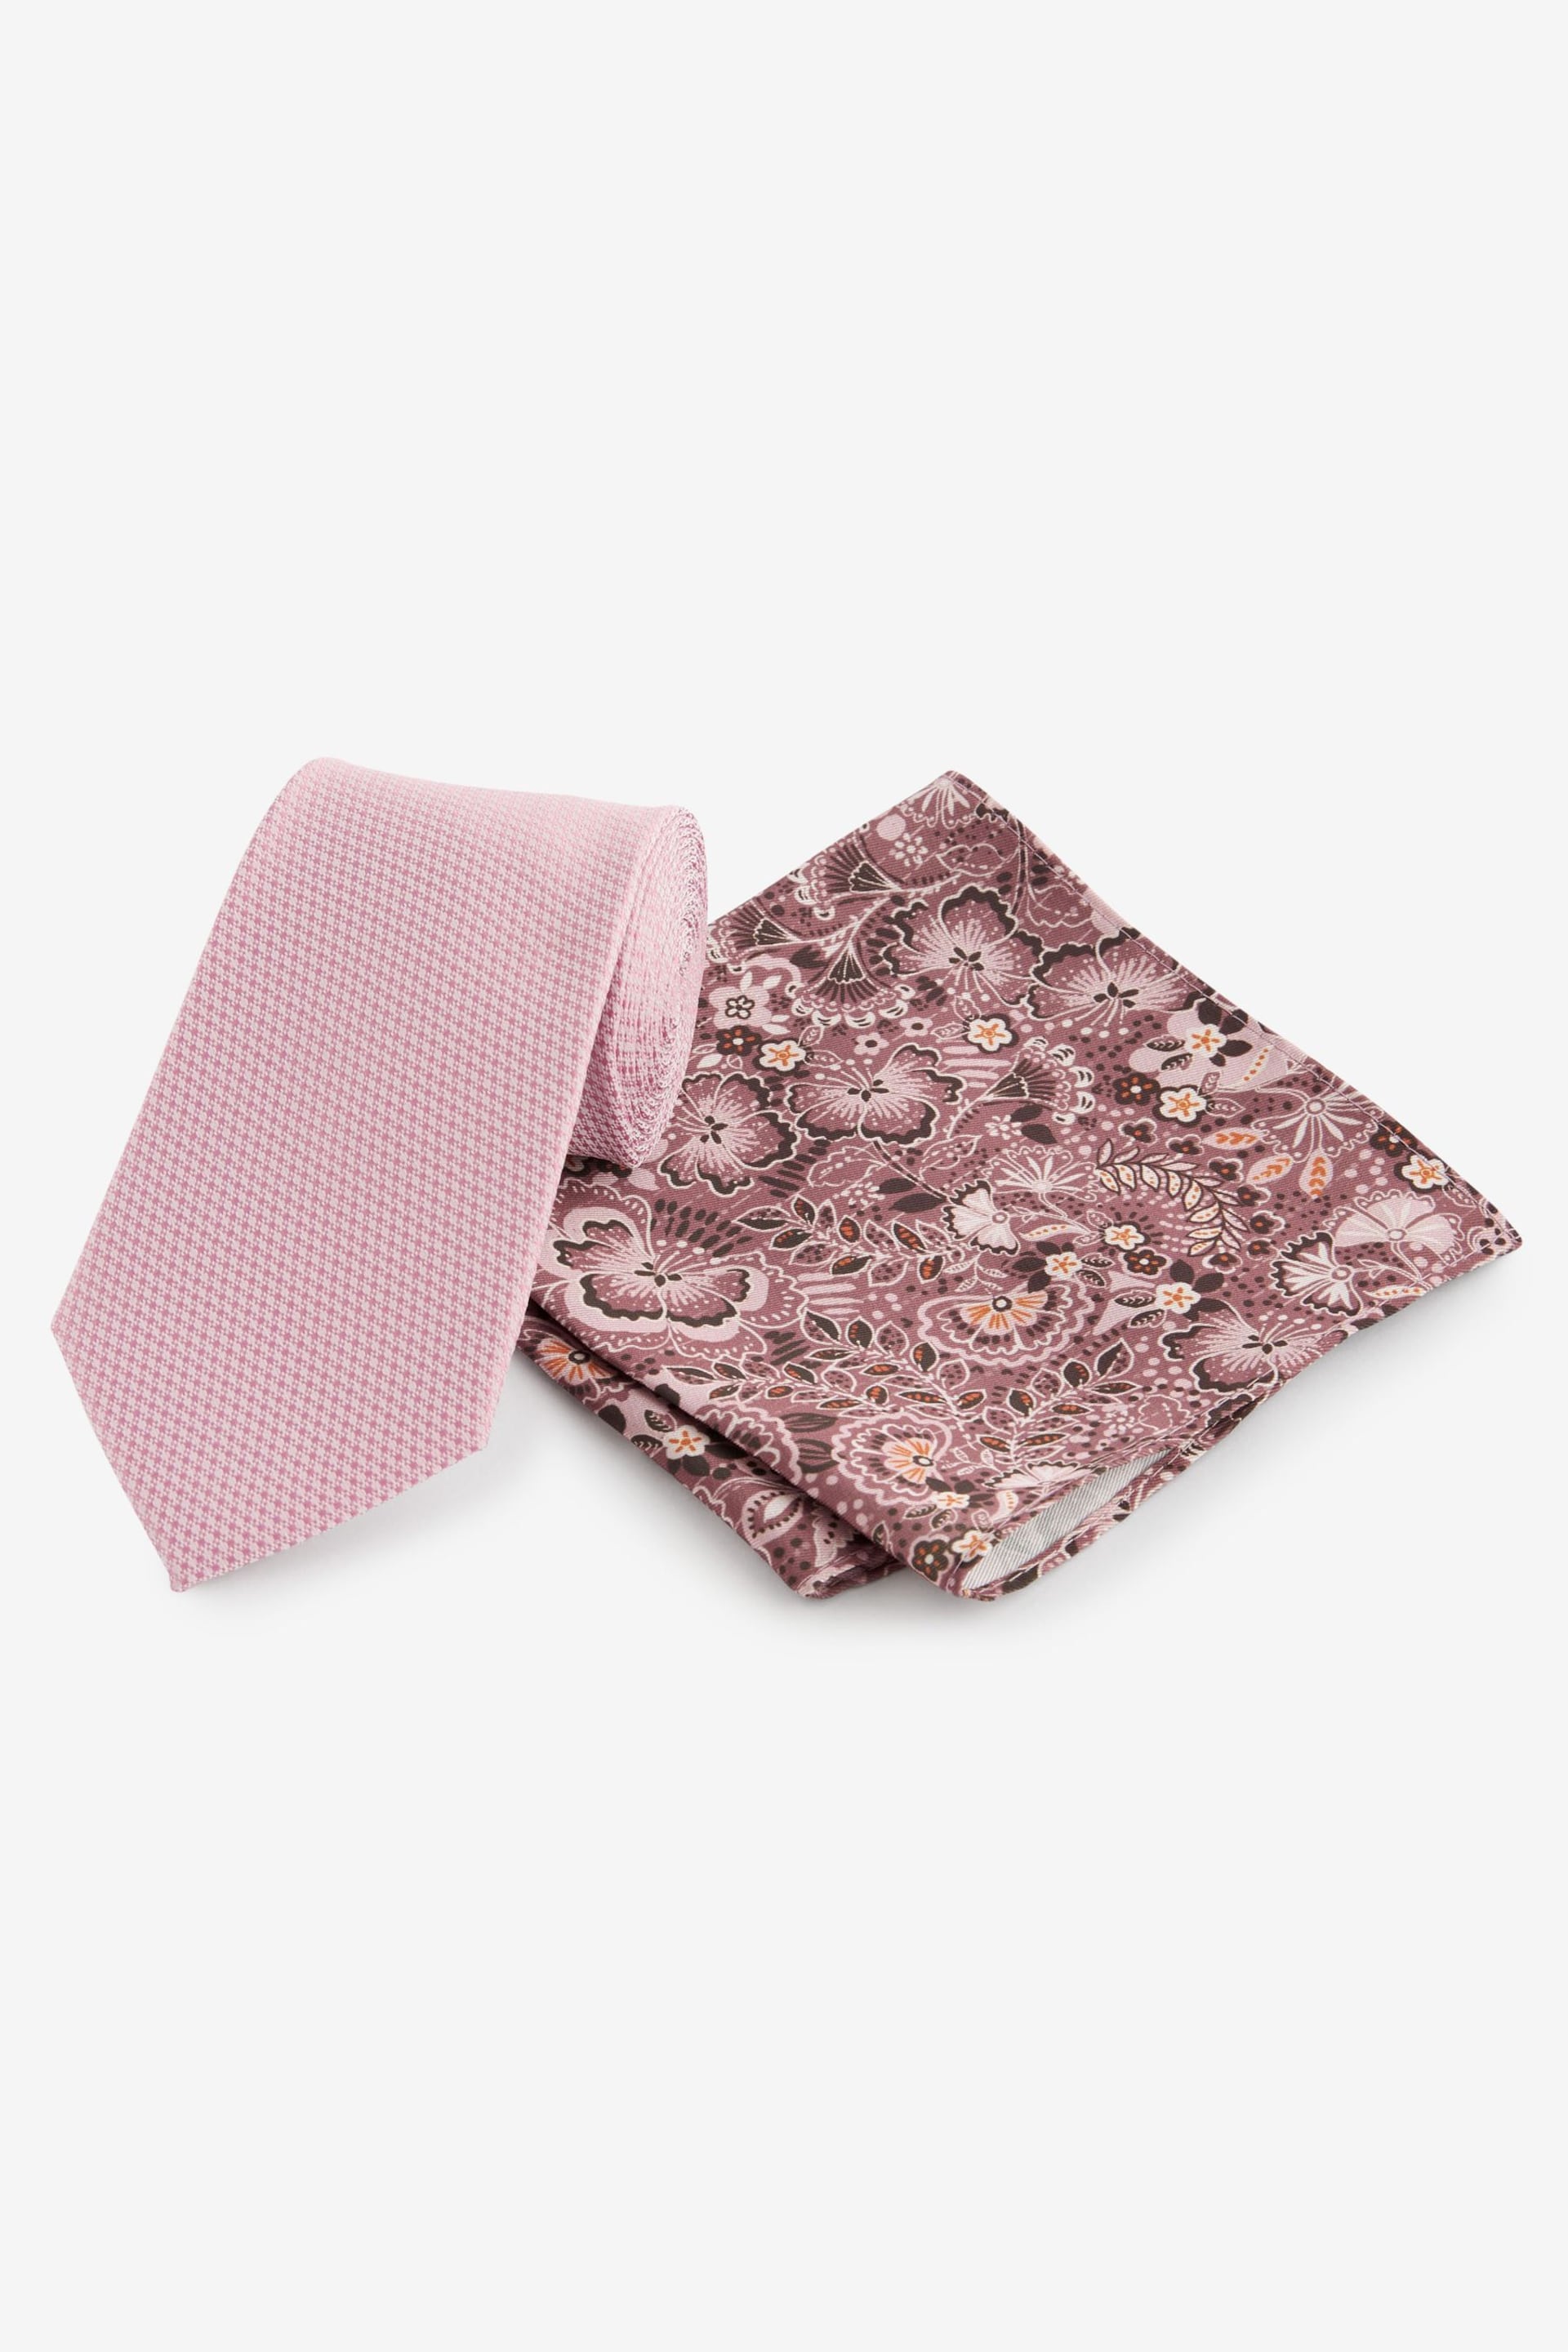 Pink Floral Tie And Pocket Square Set - Image 1 of 5